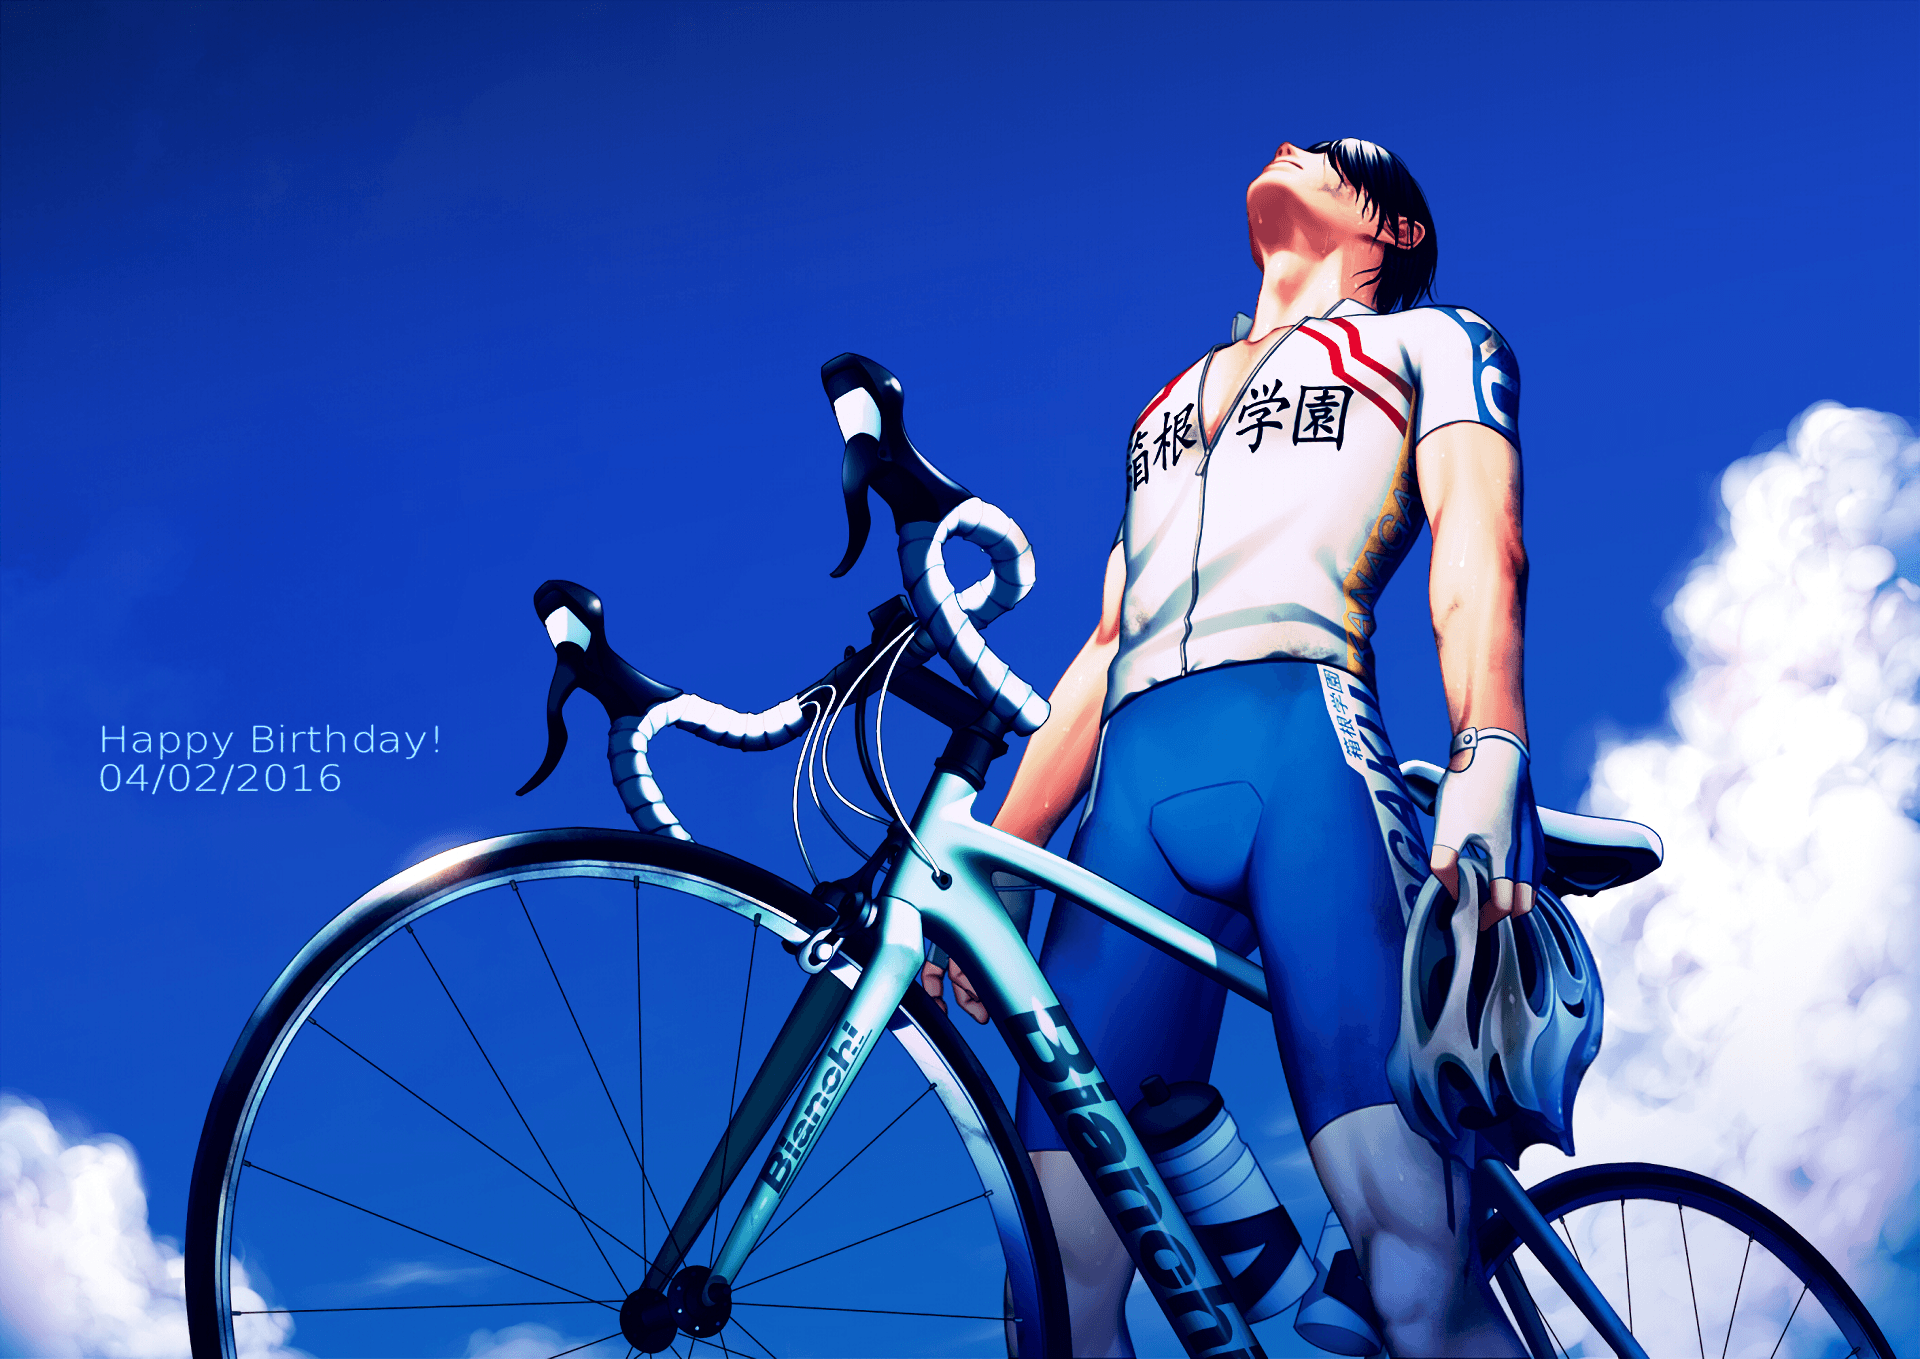 Yowamushi Pedal Full HD Wallpapers and Backgrounds